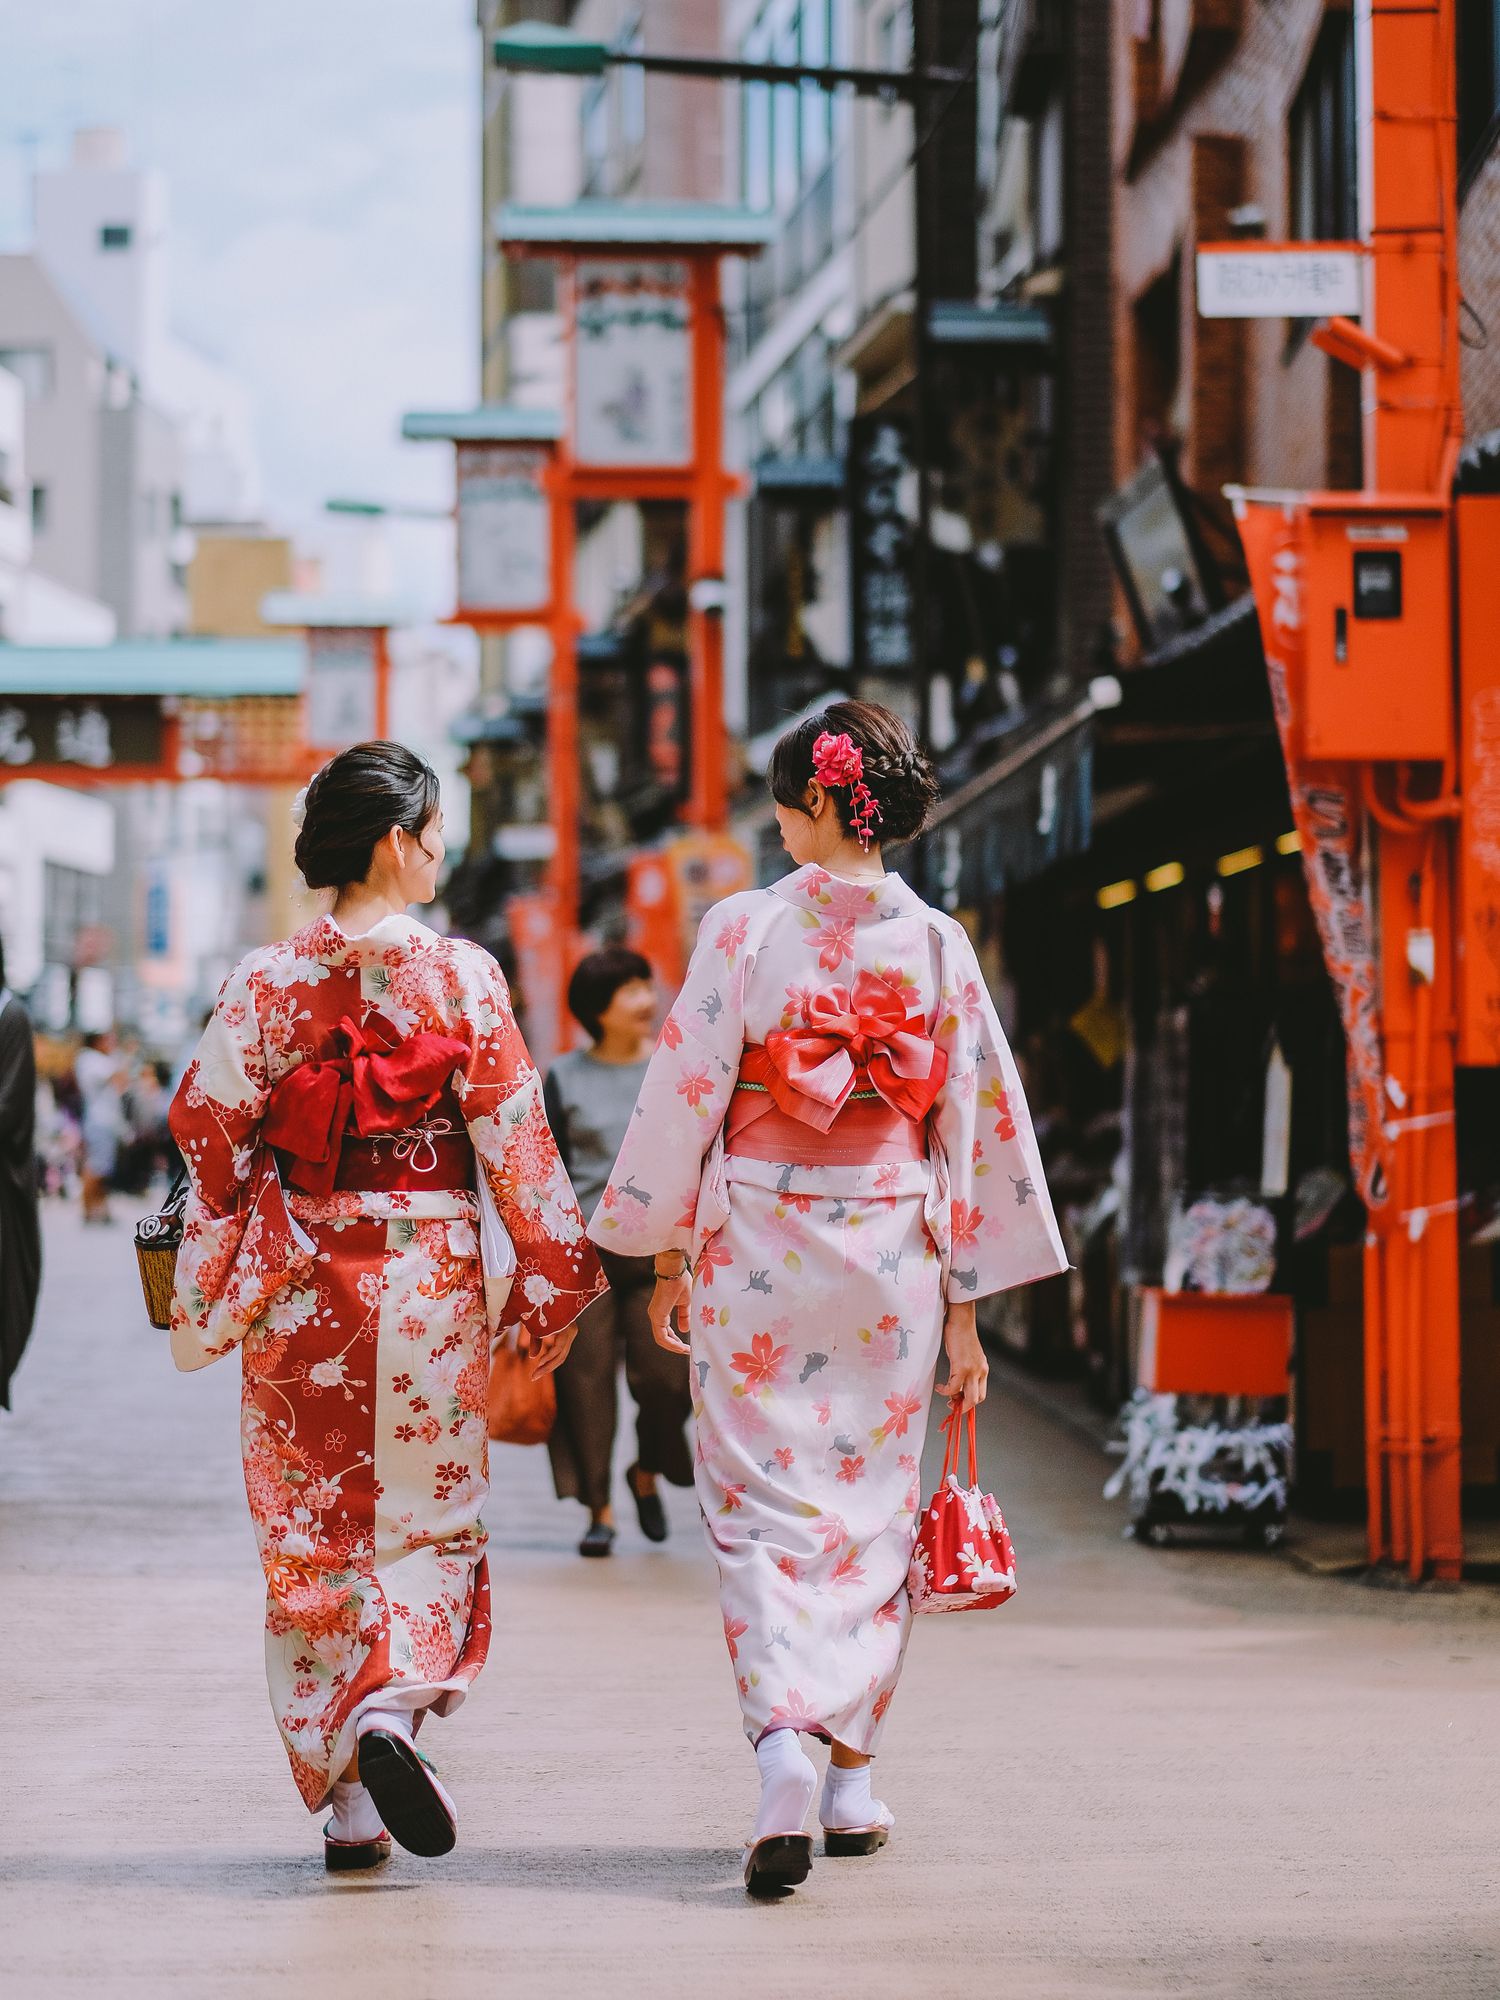 Mujeres con kimonos por las calles de Tokio